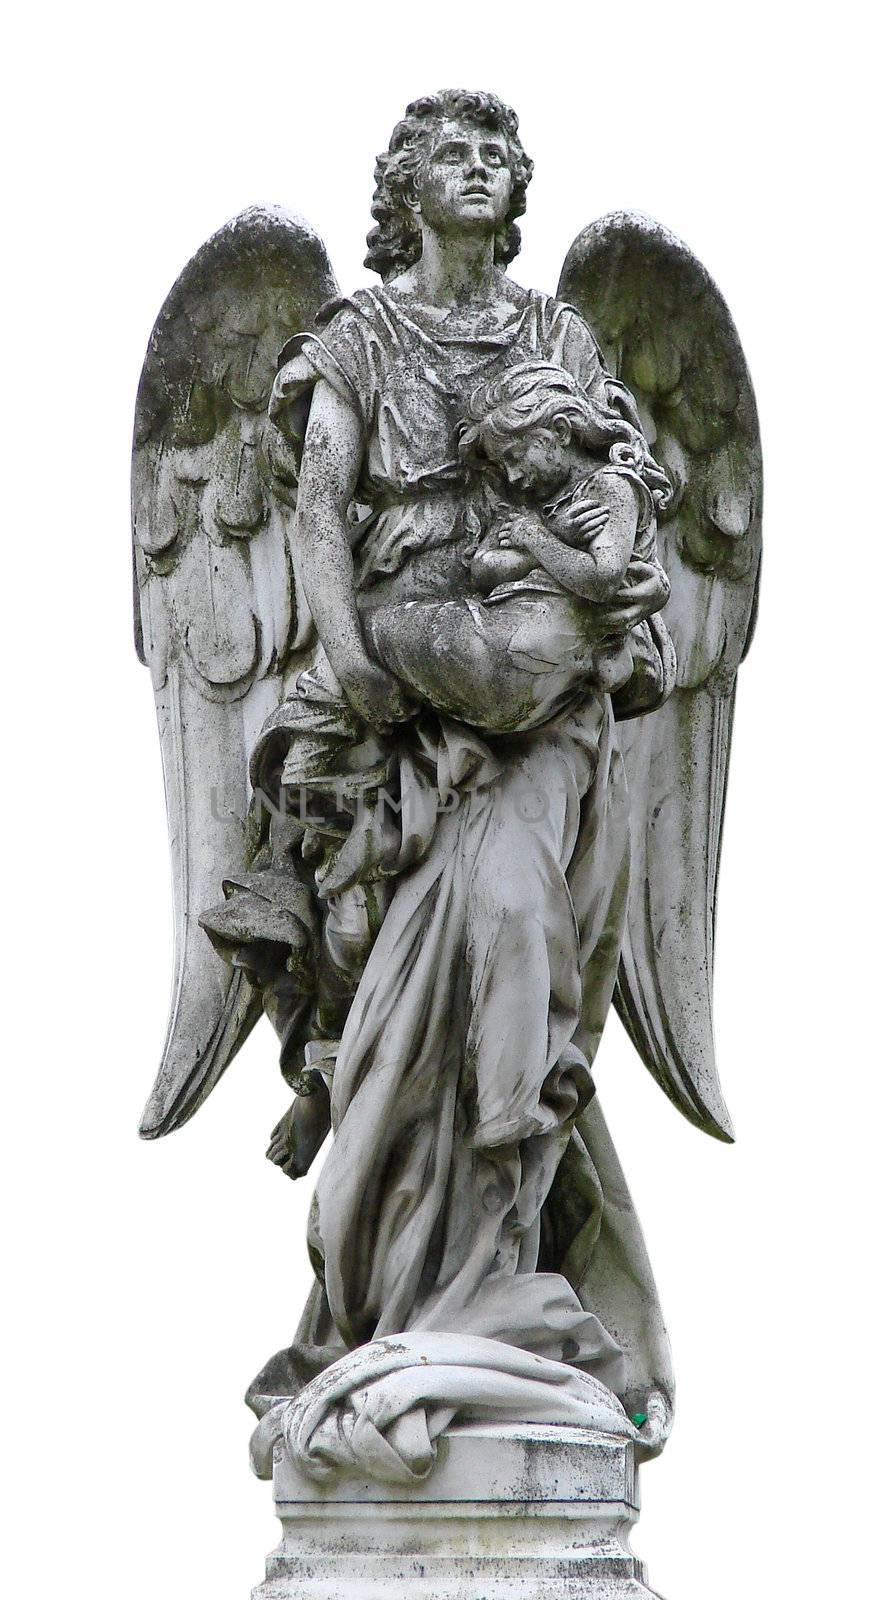 Isolated mature marble angel figurine sculpture